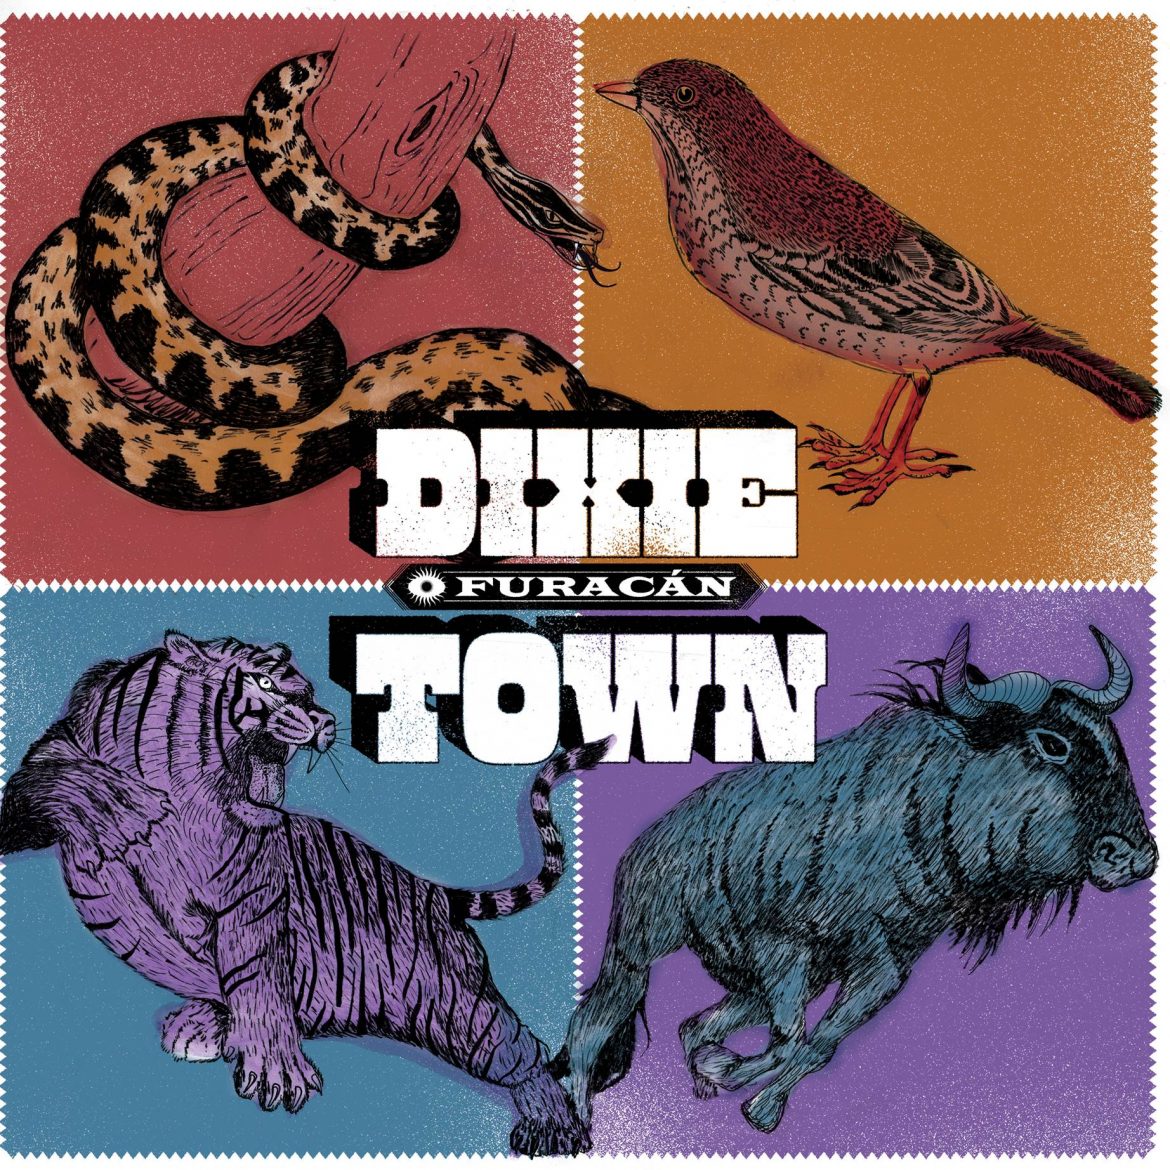 Dixie Town "O Furacán" 2013